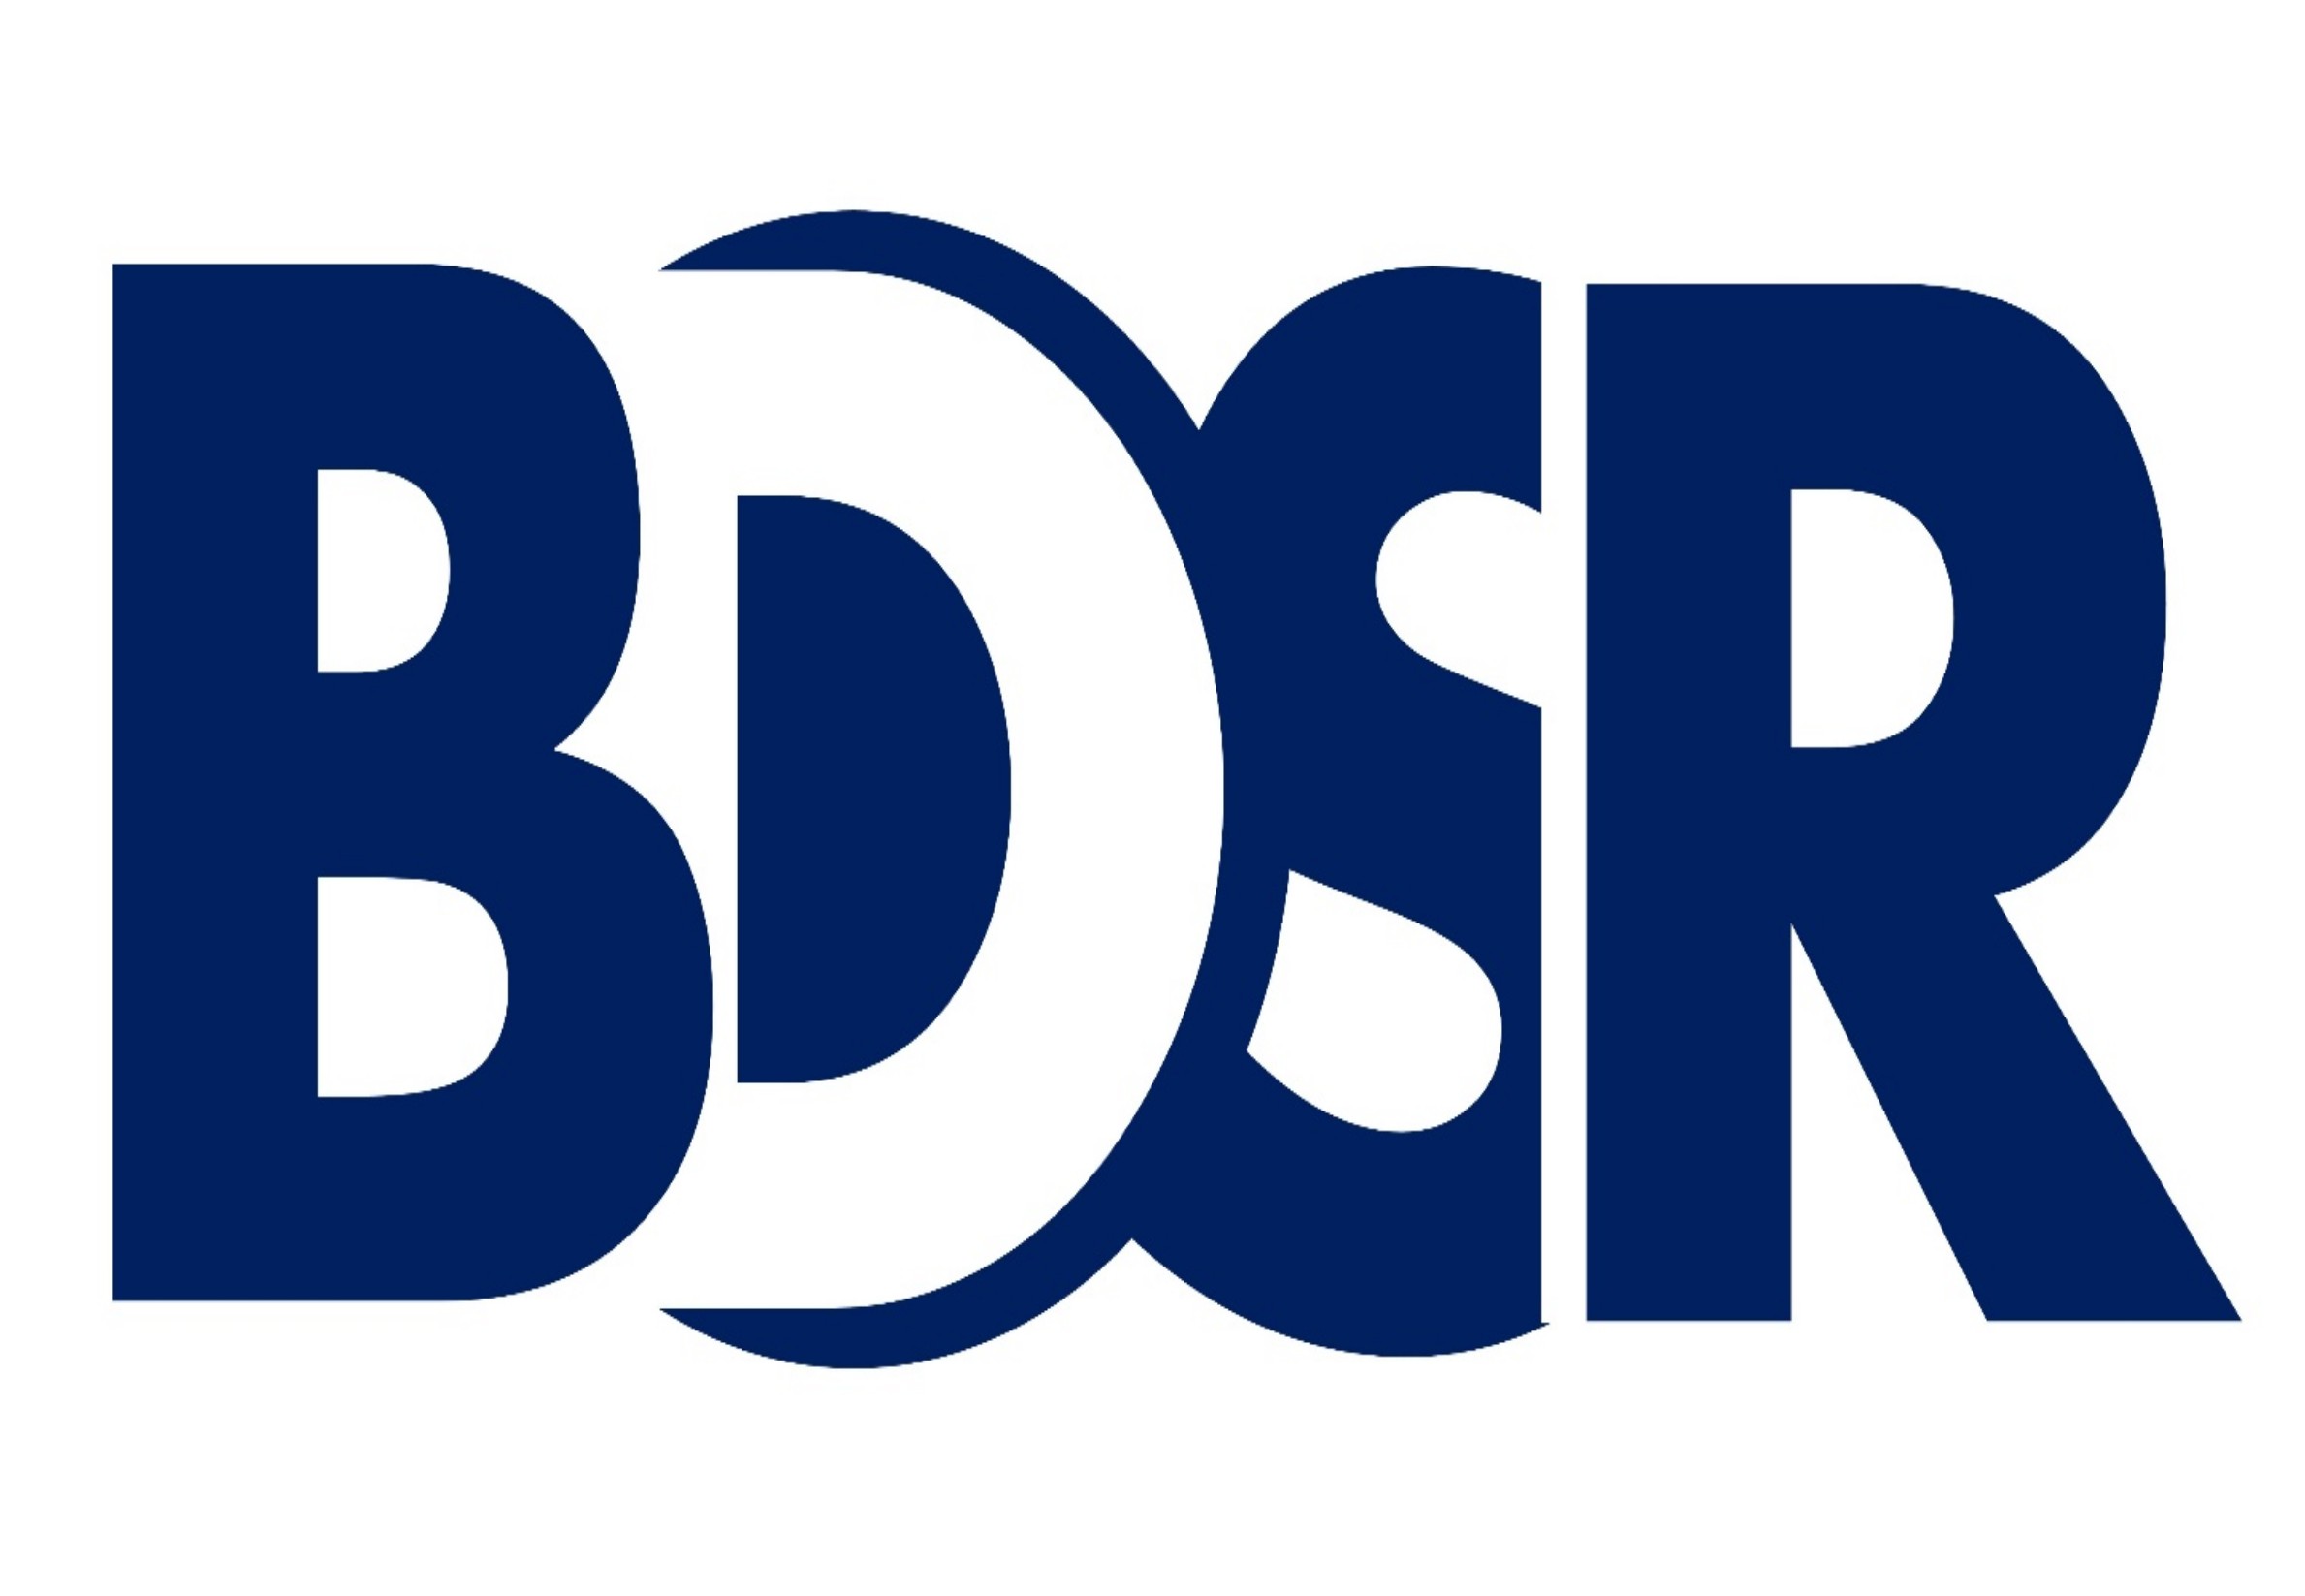 BDSR